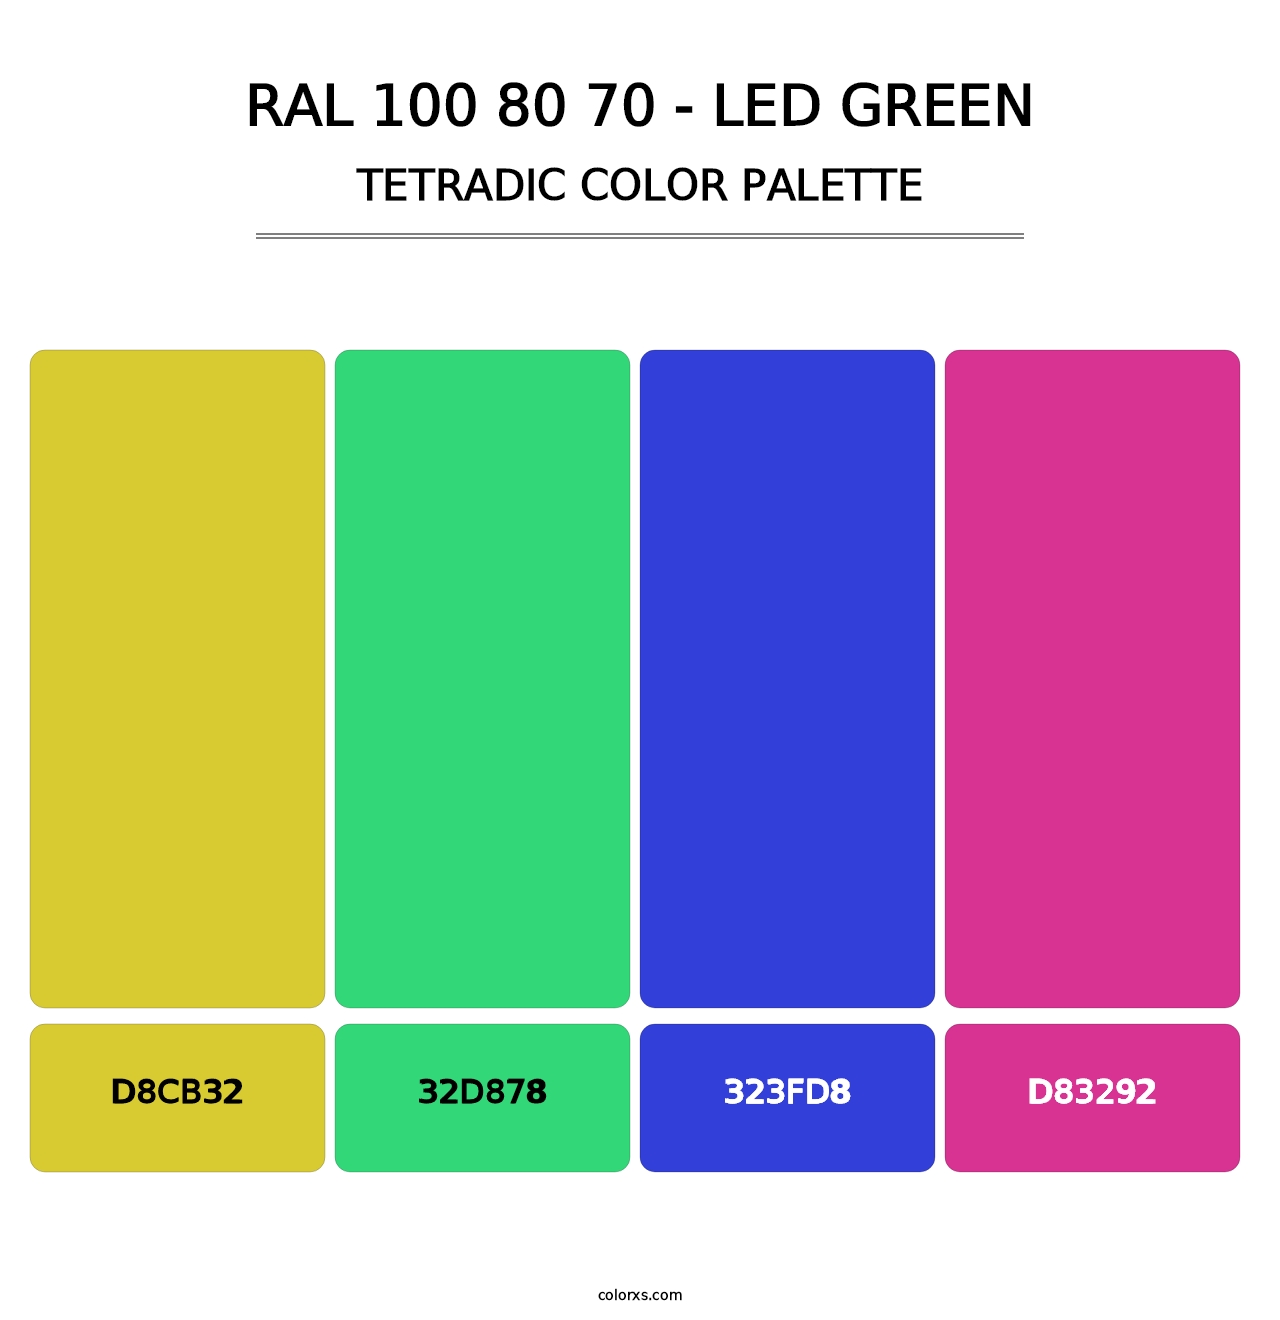 RAL 100 80 70 - LED Green - Tetradic Color Palette